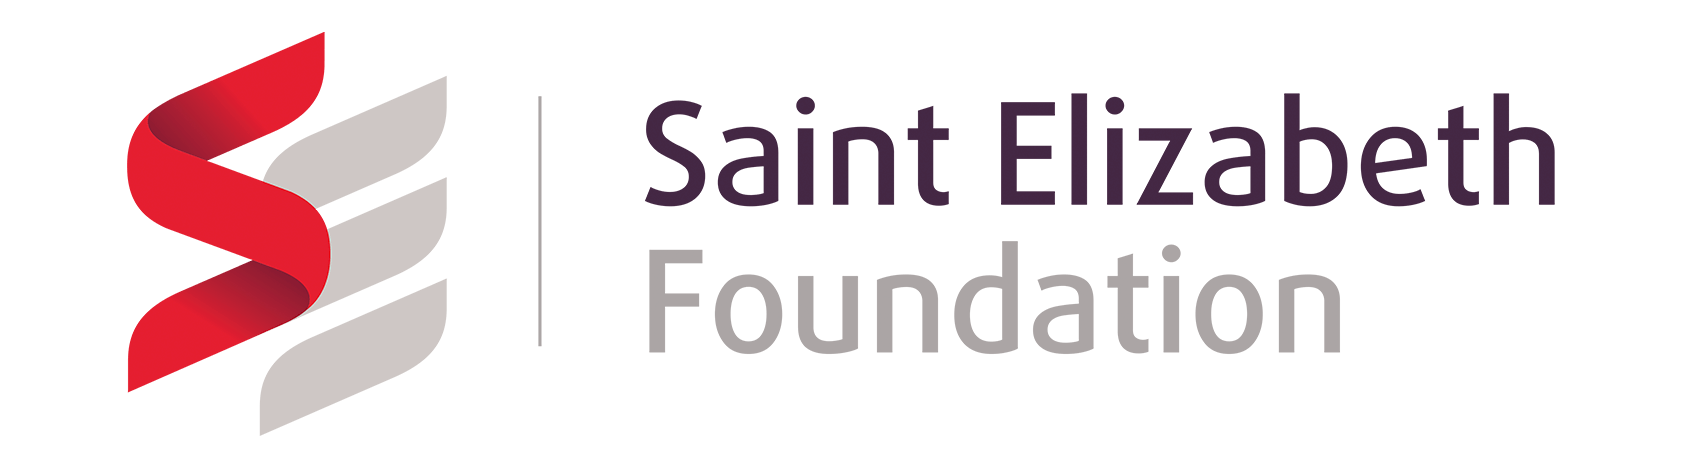 Saint Elizabeth Foundation logo